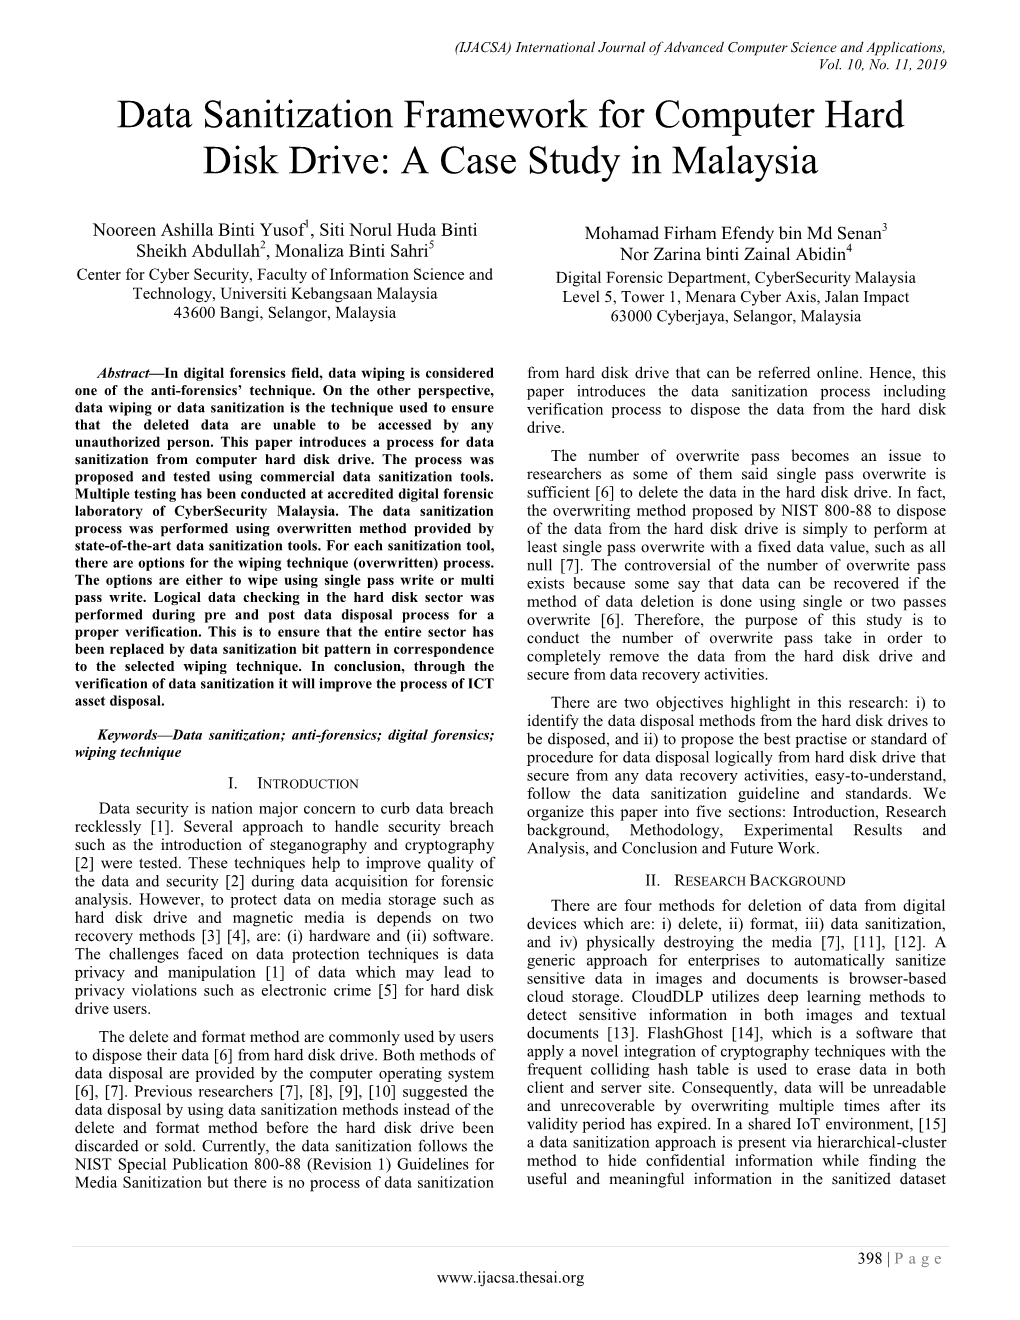 Data Sanitization Framework for Computer Hard Disk Drive: a Case Study in Malaysia